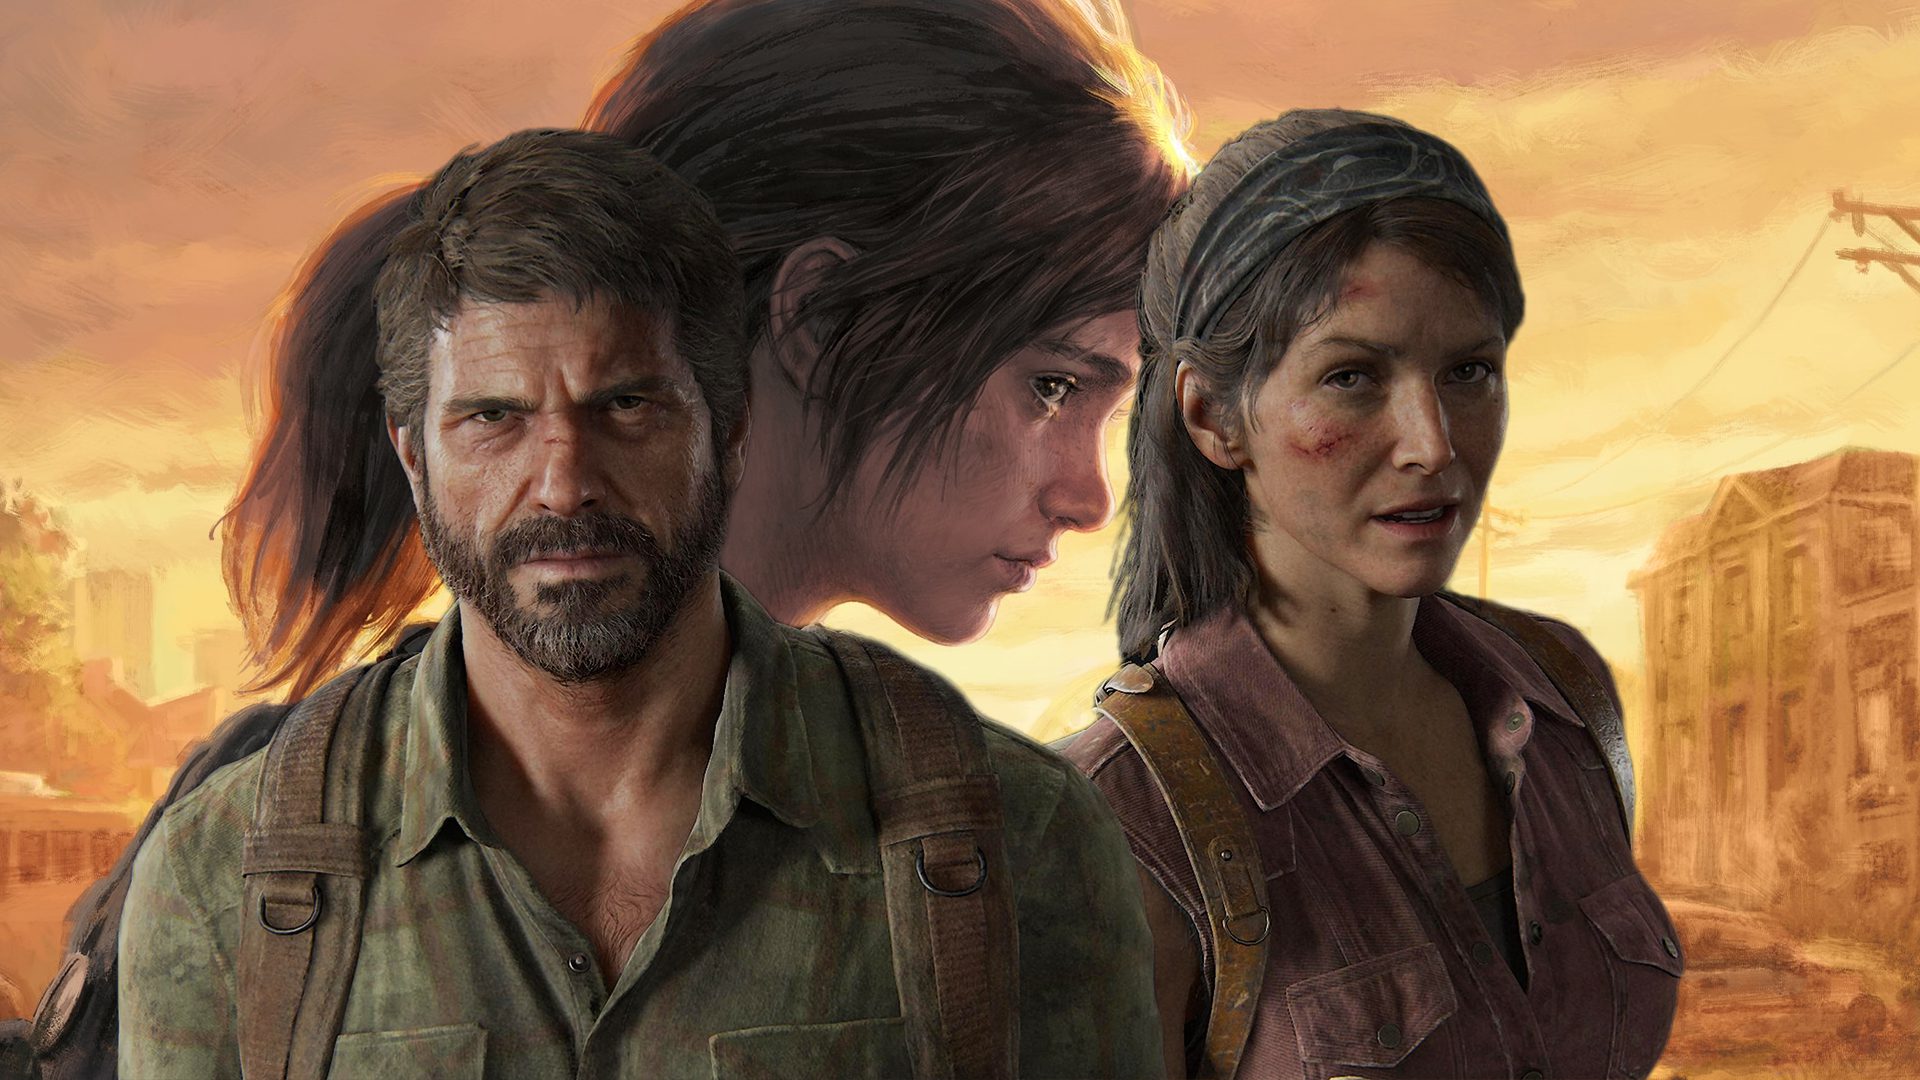 The Last of Us: Nick Offerman interpretará Bill na série da HBO Max